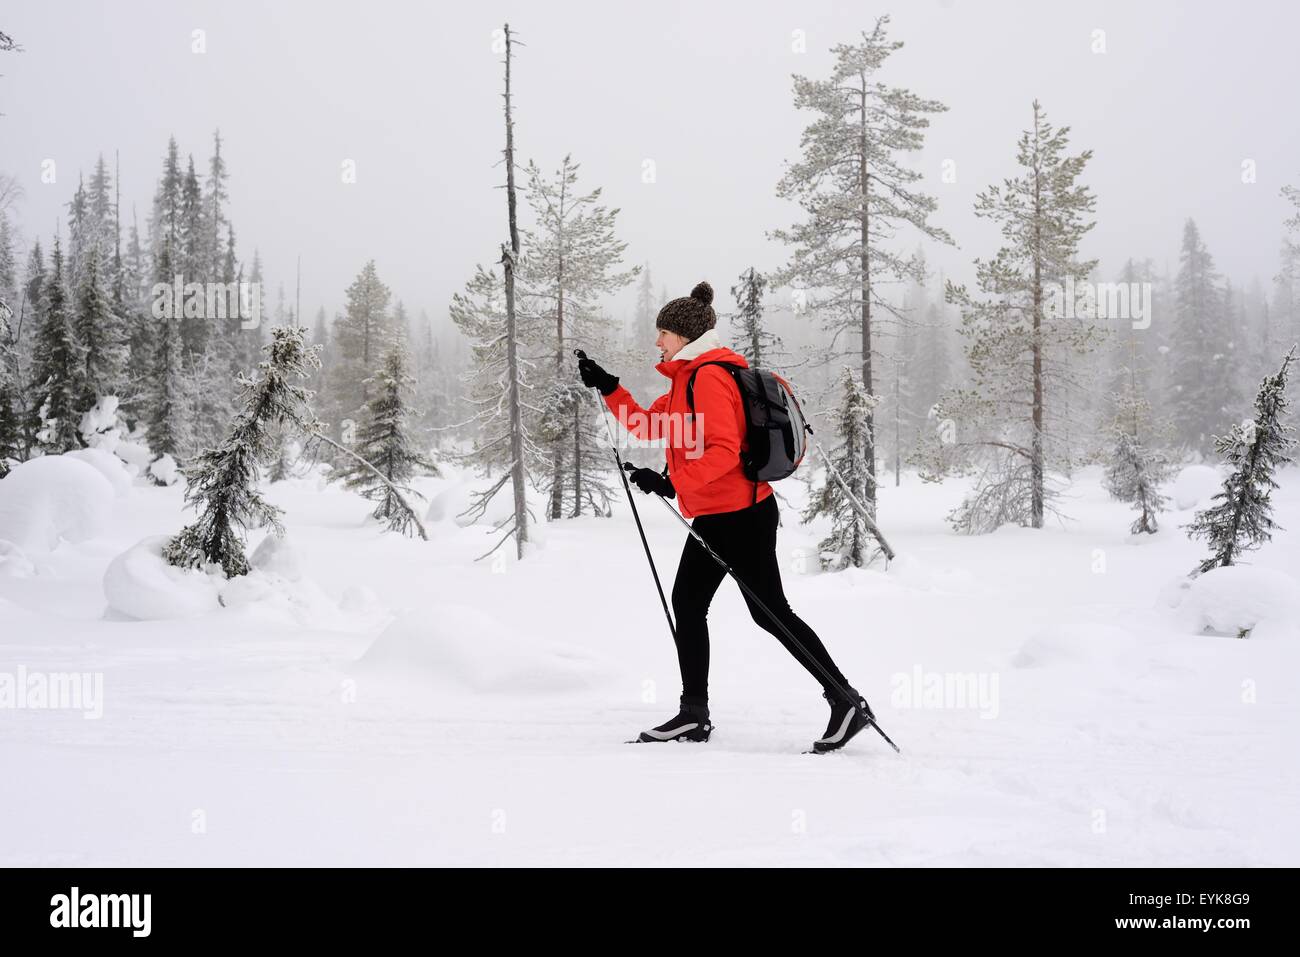 Walking snow rum перевод. Нордик Сноу. Nordic Walking Finland. XC skier Lapland. Forest Cover in Nordics.